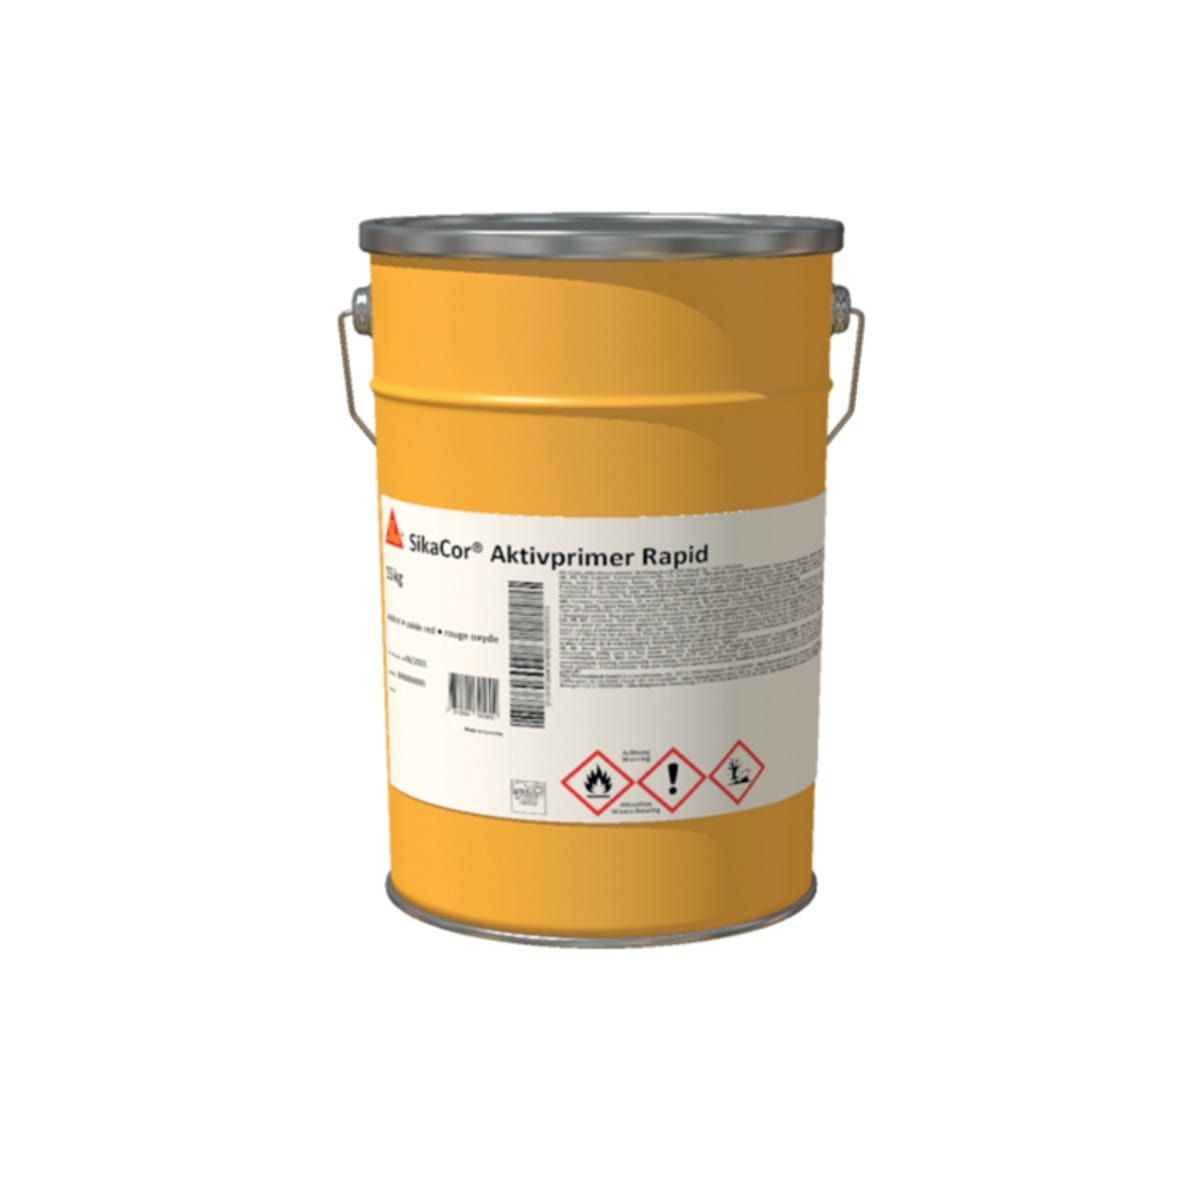 SikaCor® Aktivprimer Rapid жовтий, червоний - грунт для металевих поверхонь, очищених вручну